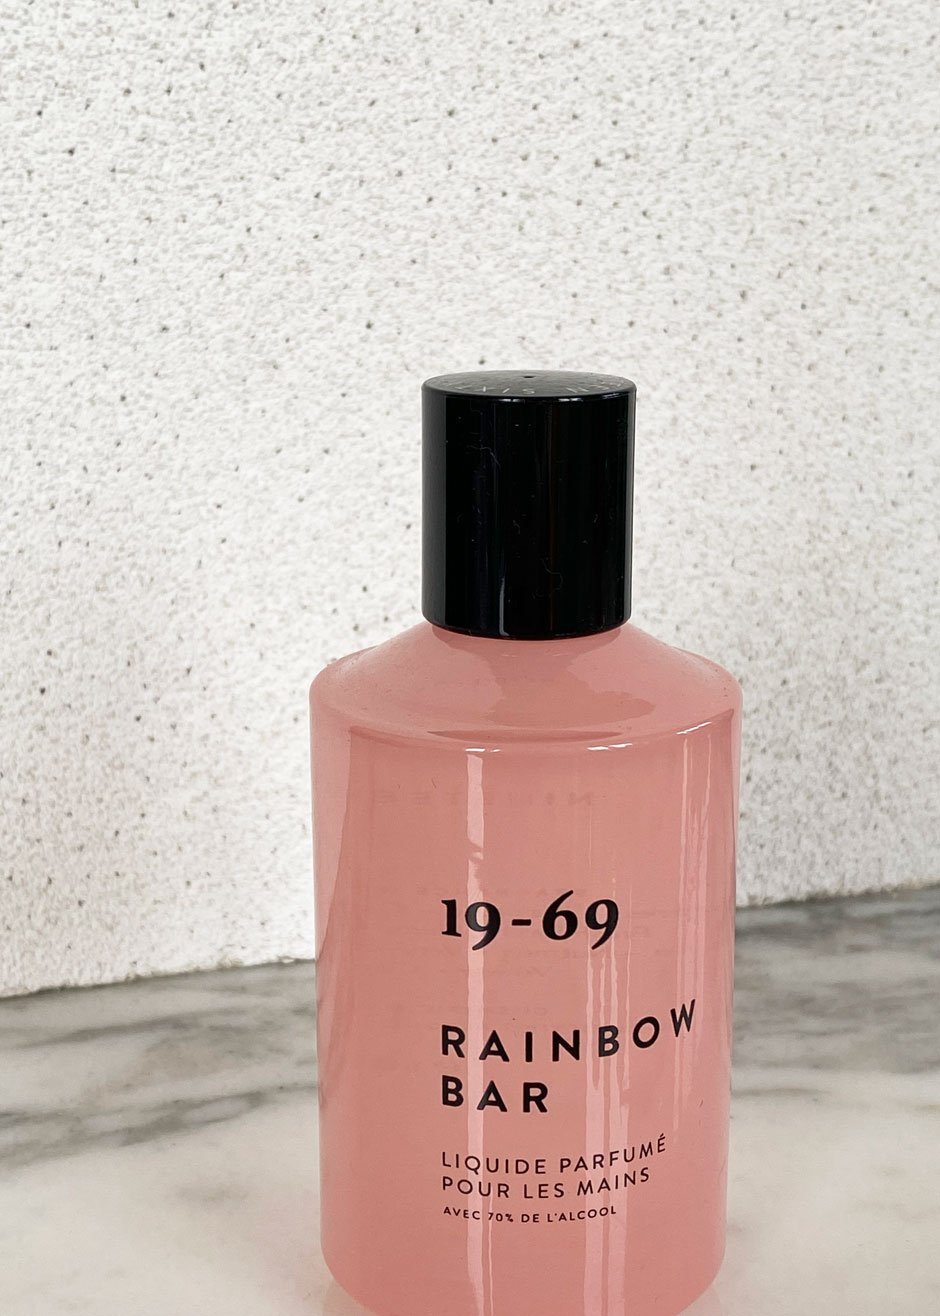 19-69 Rainbow Bar Hand Sanitizing Spray - 3